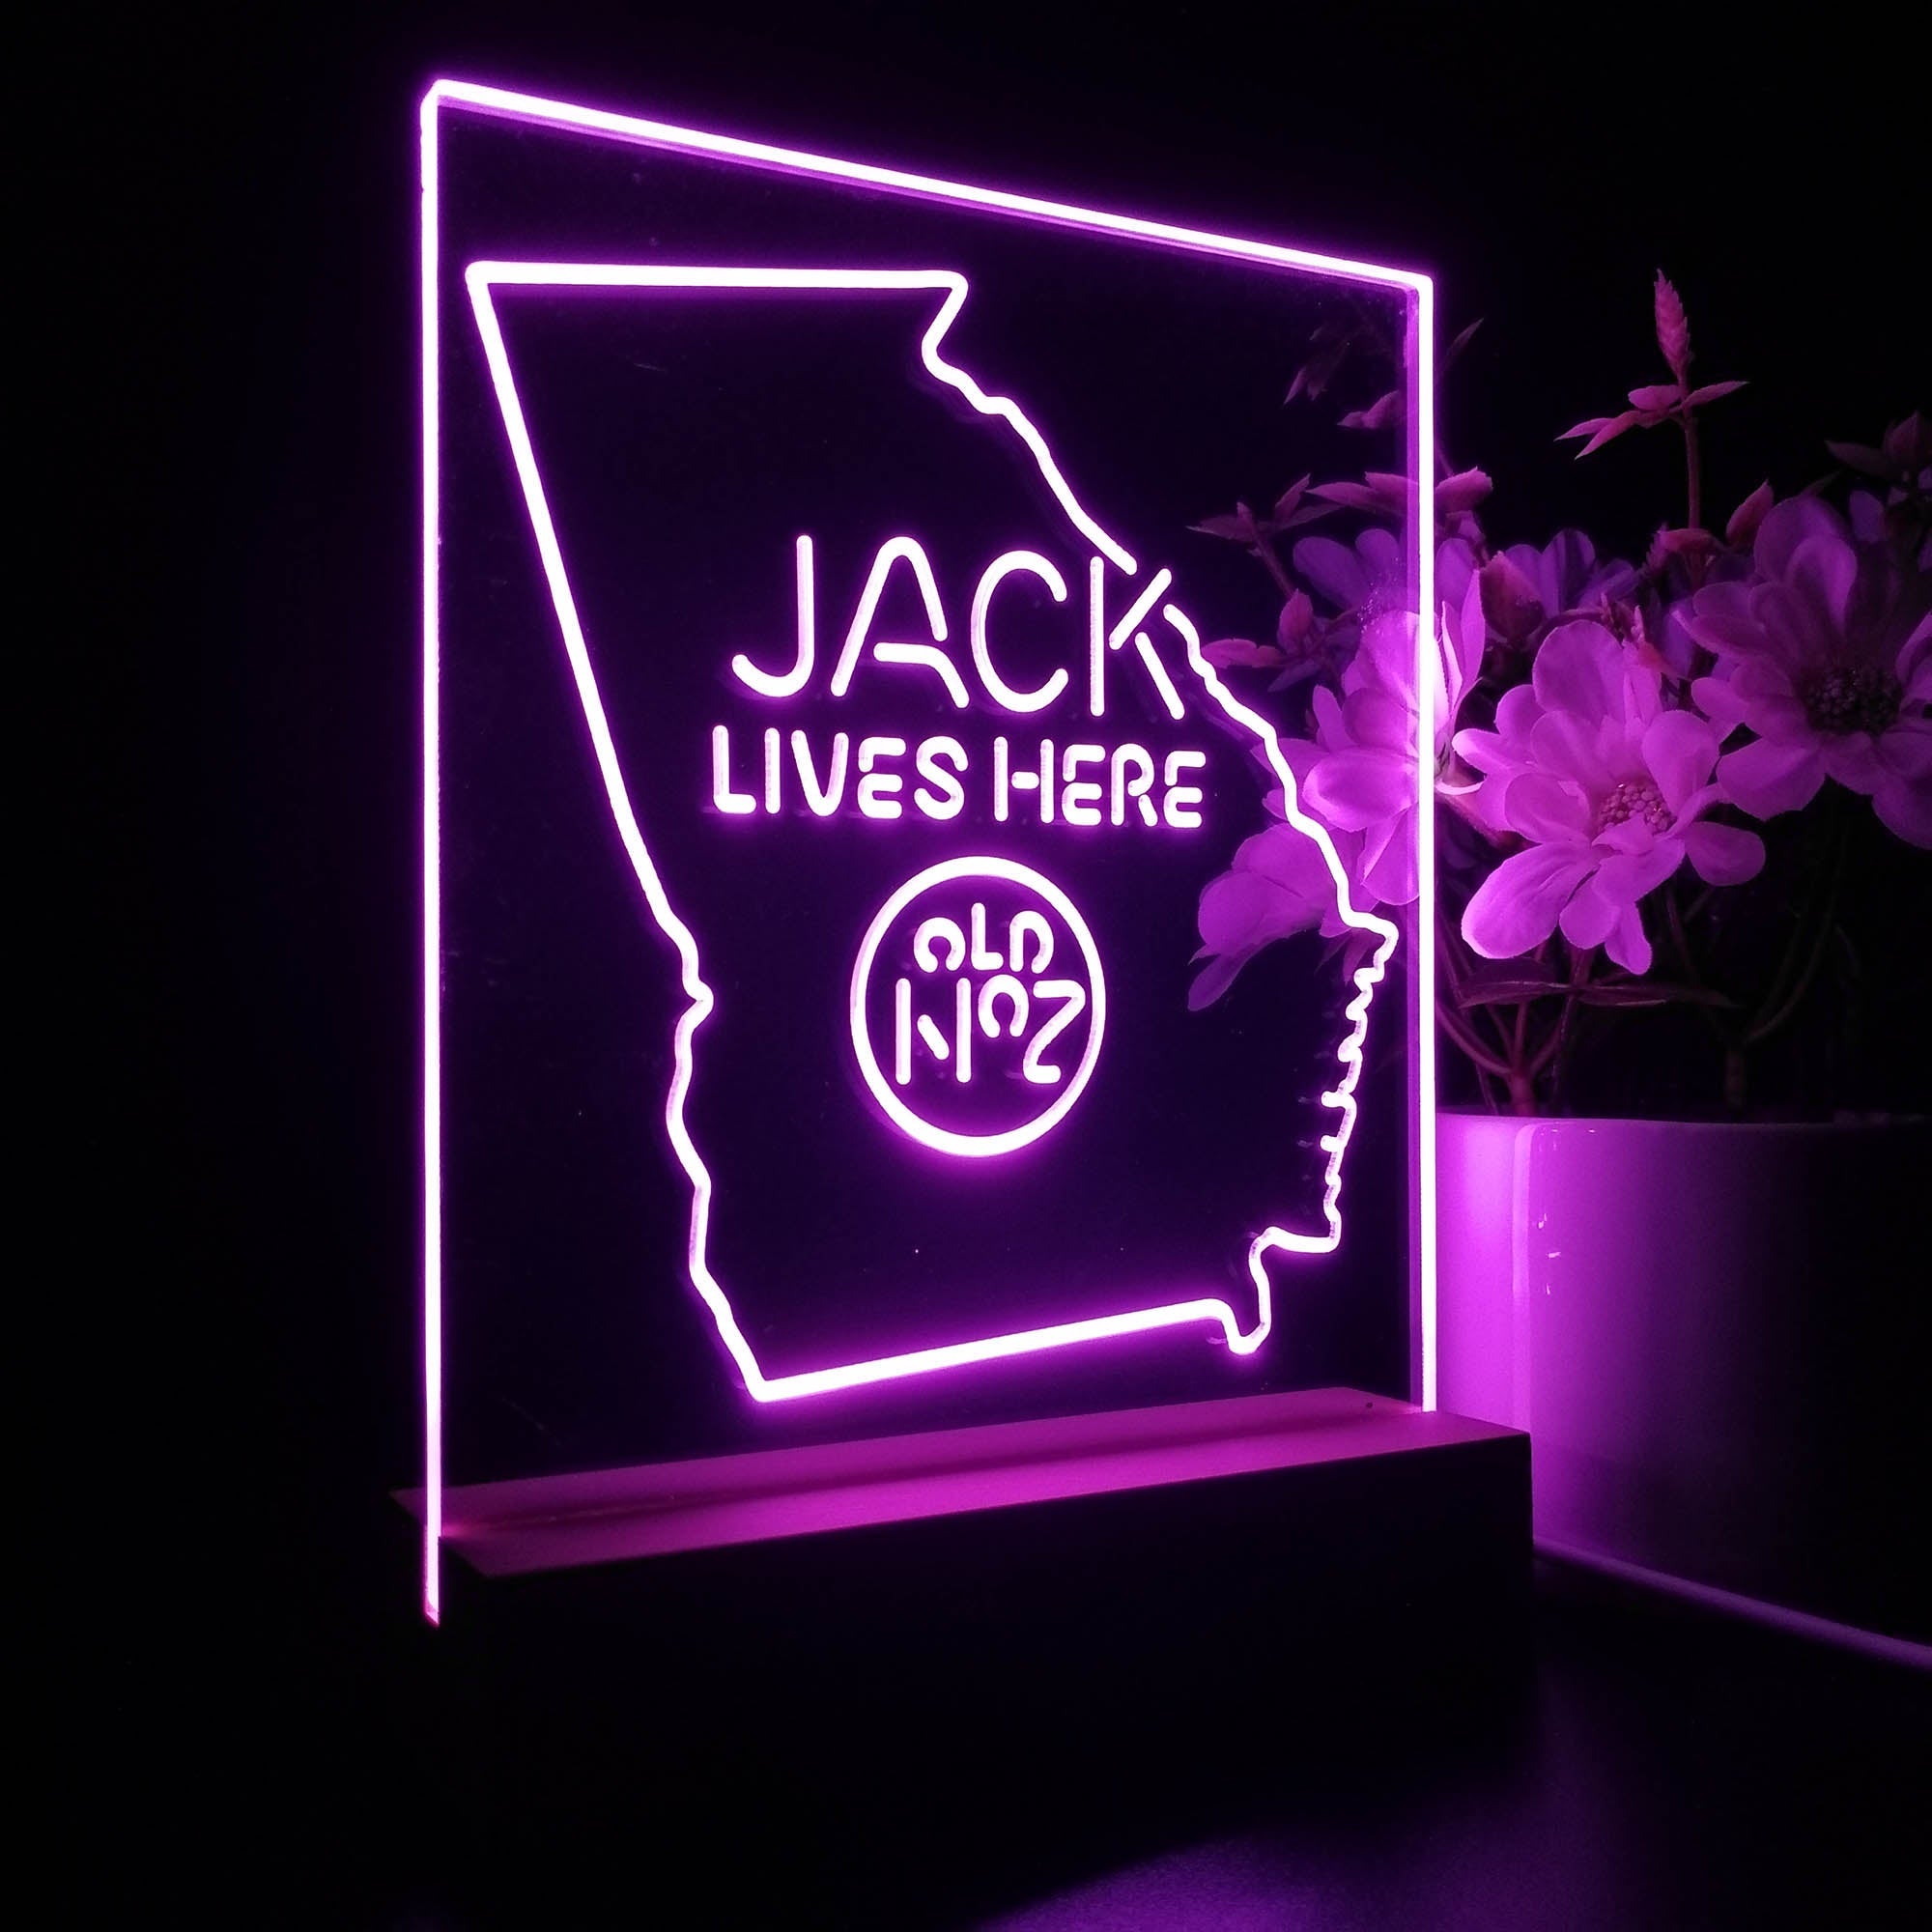 Georgia Jack Lives Here Night Light Neon Pub Bar Lamp